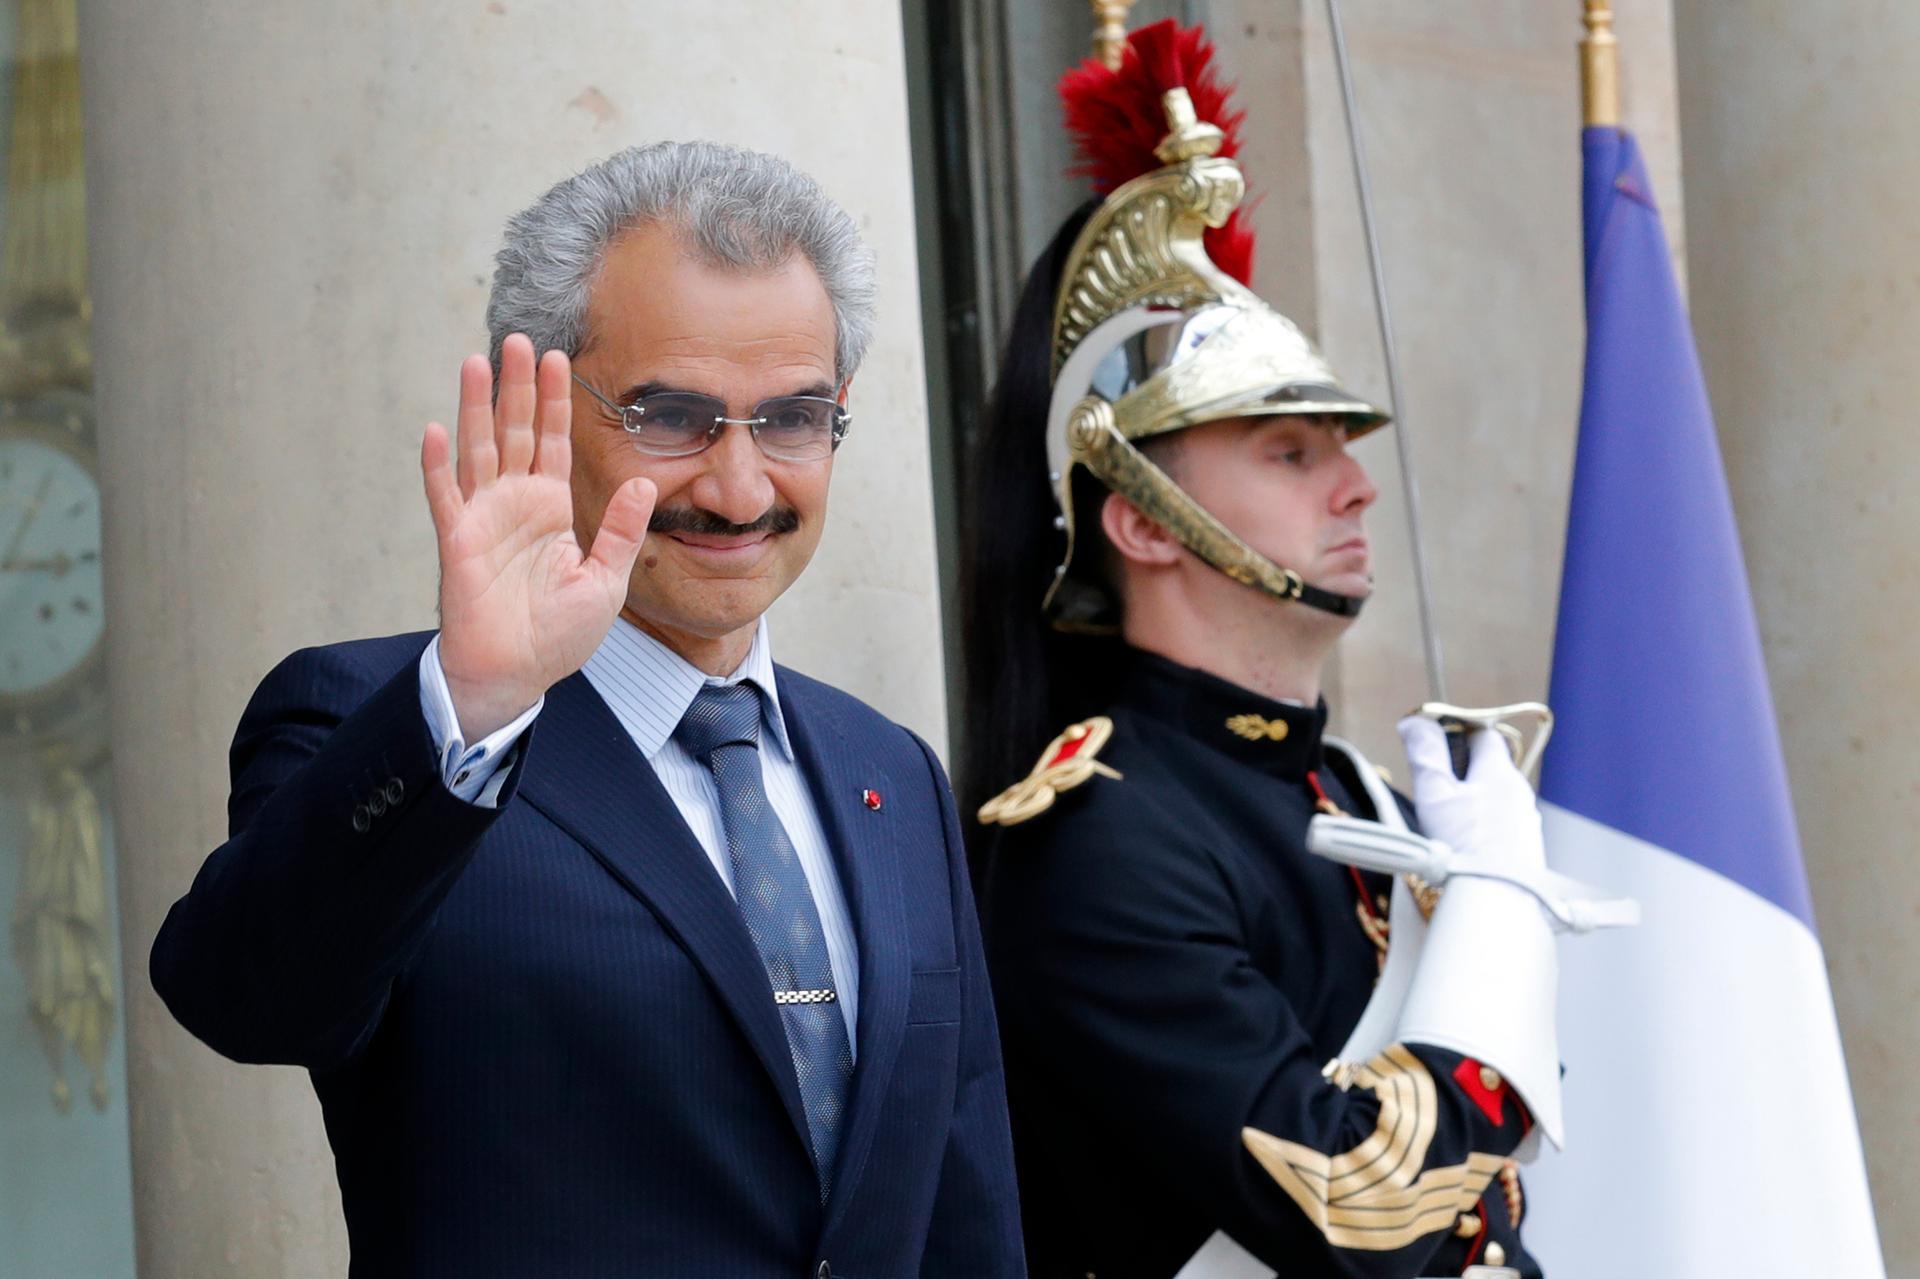 Saudi Arabian Prince Al-Waleed bin Talal arrives at the Elysee palace in Paris, France